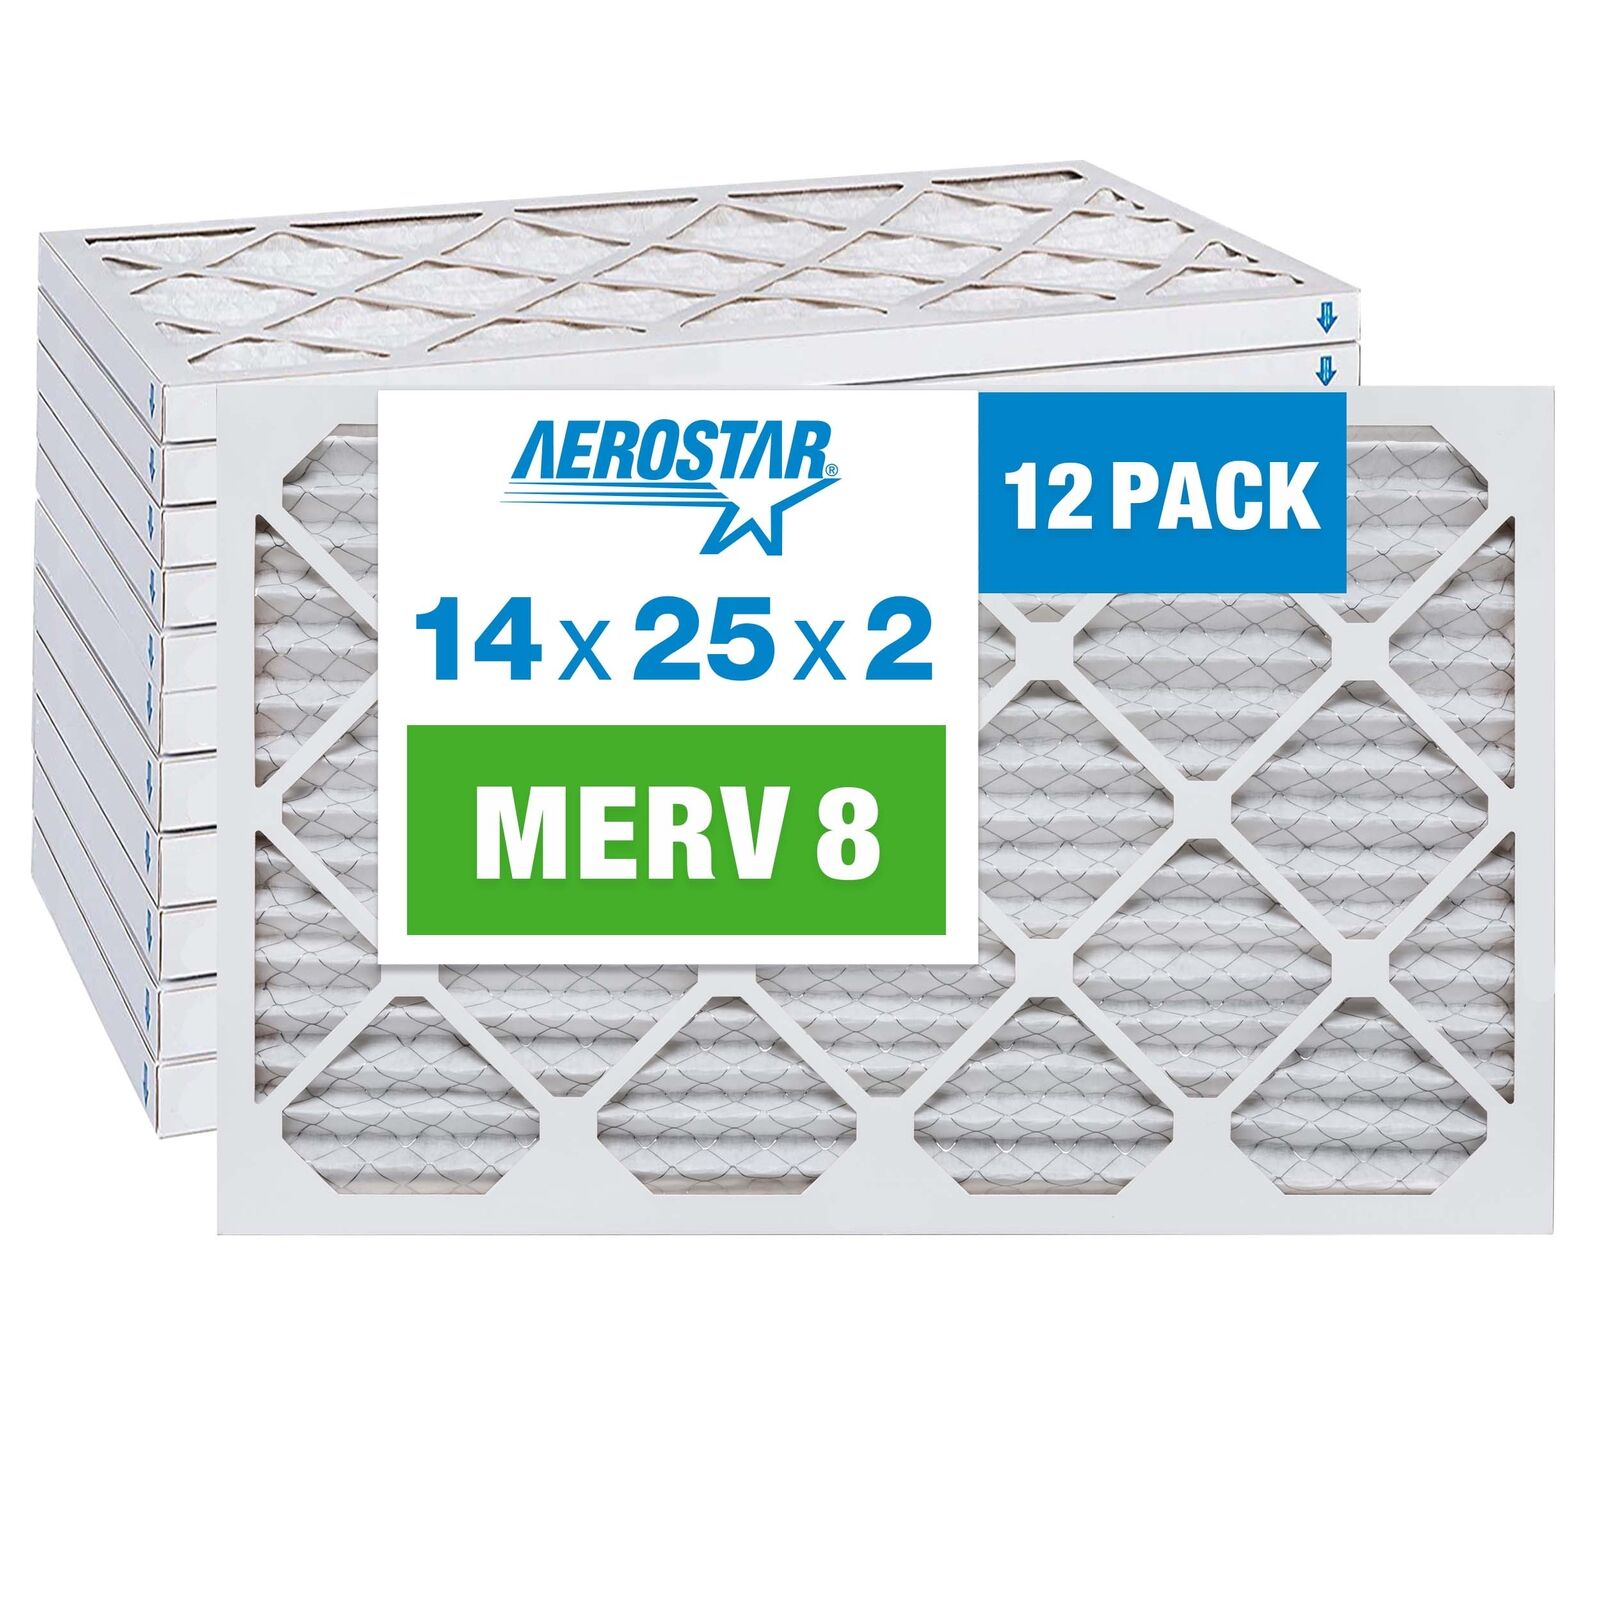 Aerostar 14x25x2 MERV 8 Air Filter, 12 Pack (13 1/2\